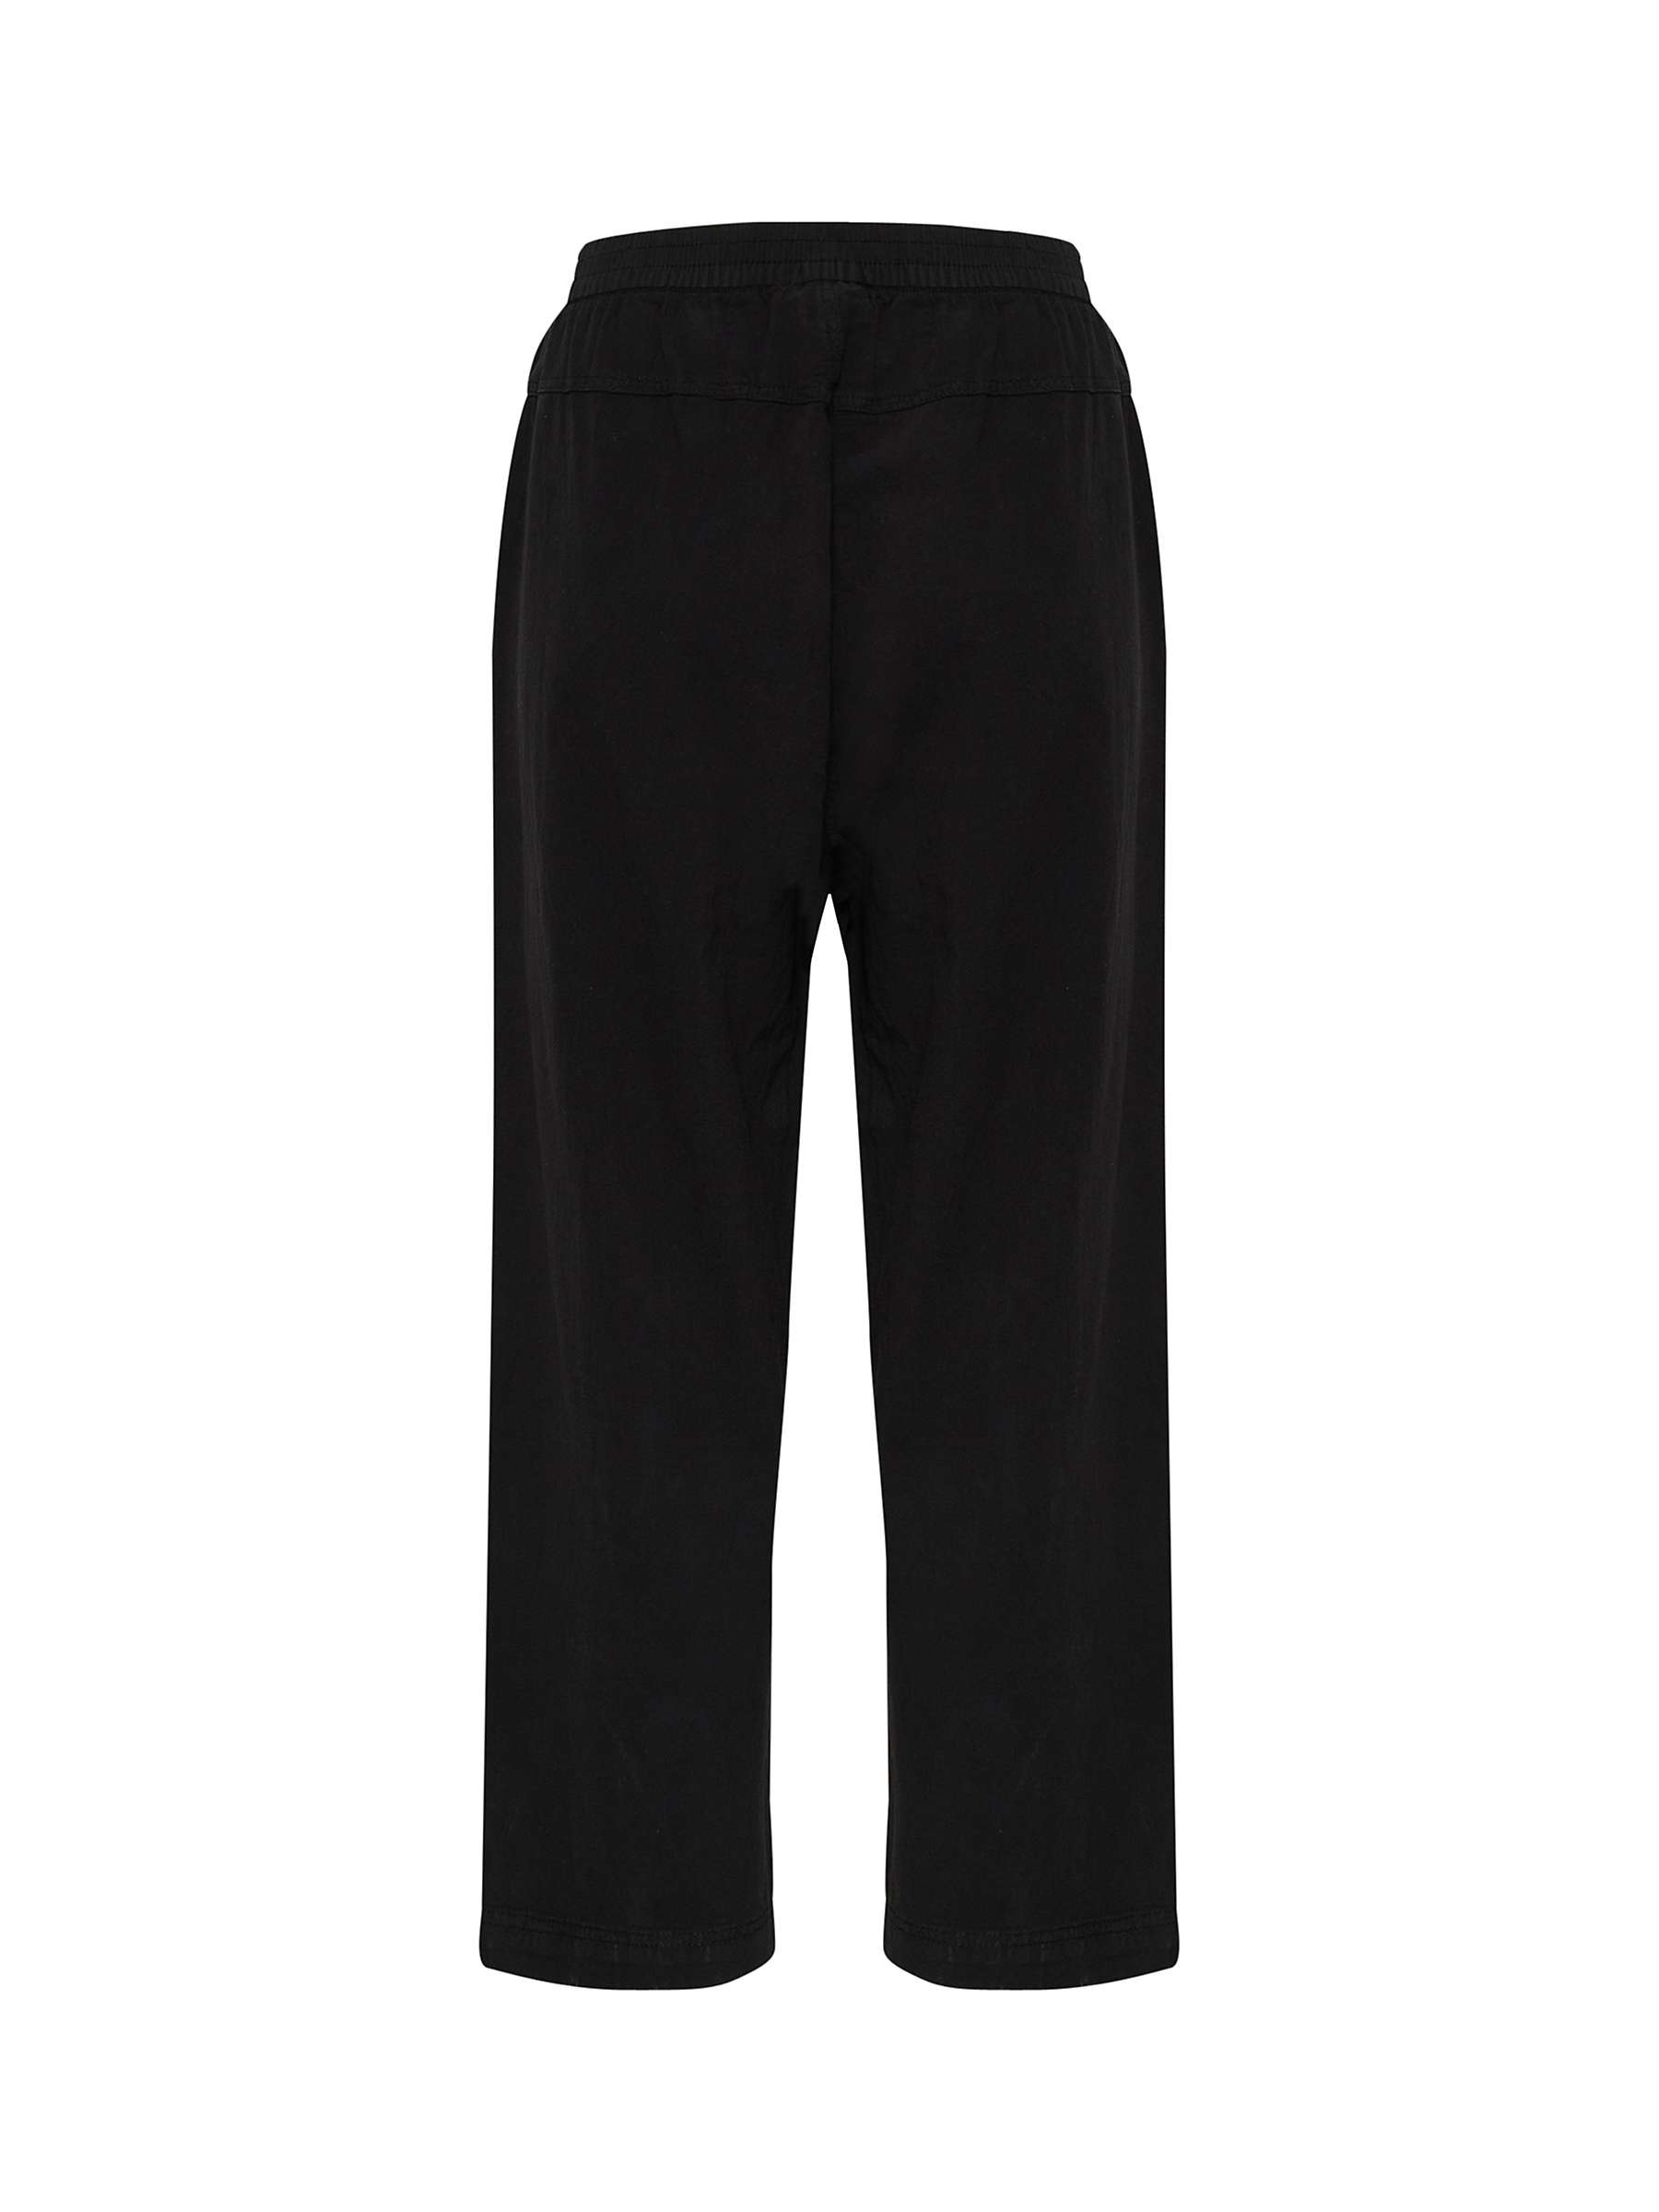 Buy KAFFE Naya Culotte Trousers Online at johnlewis.com